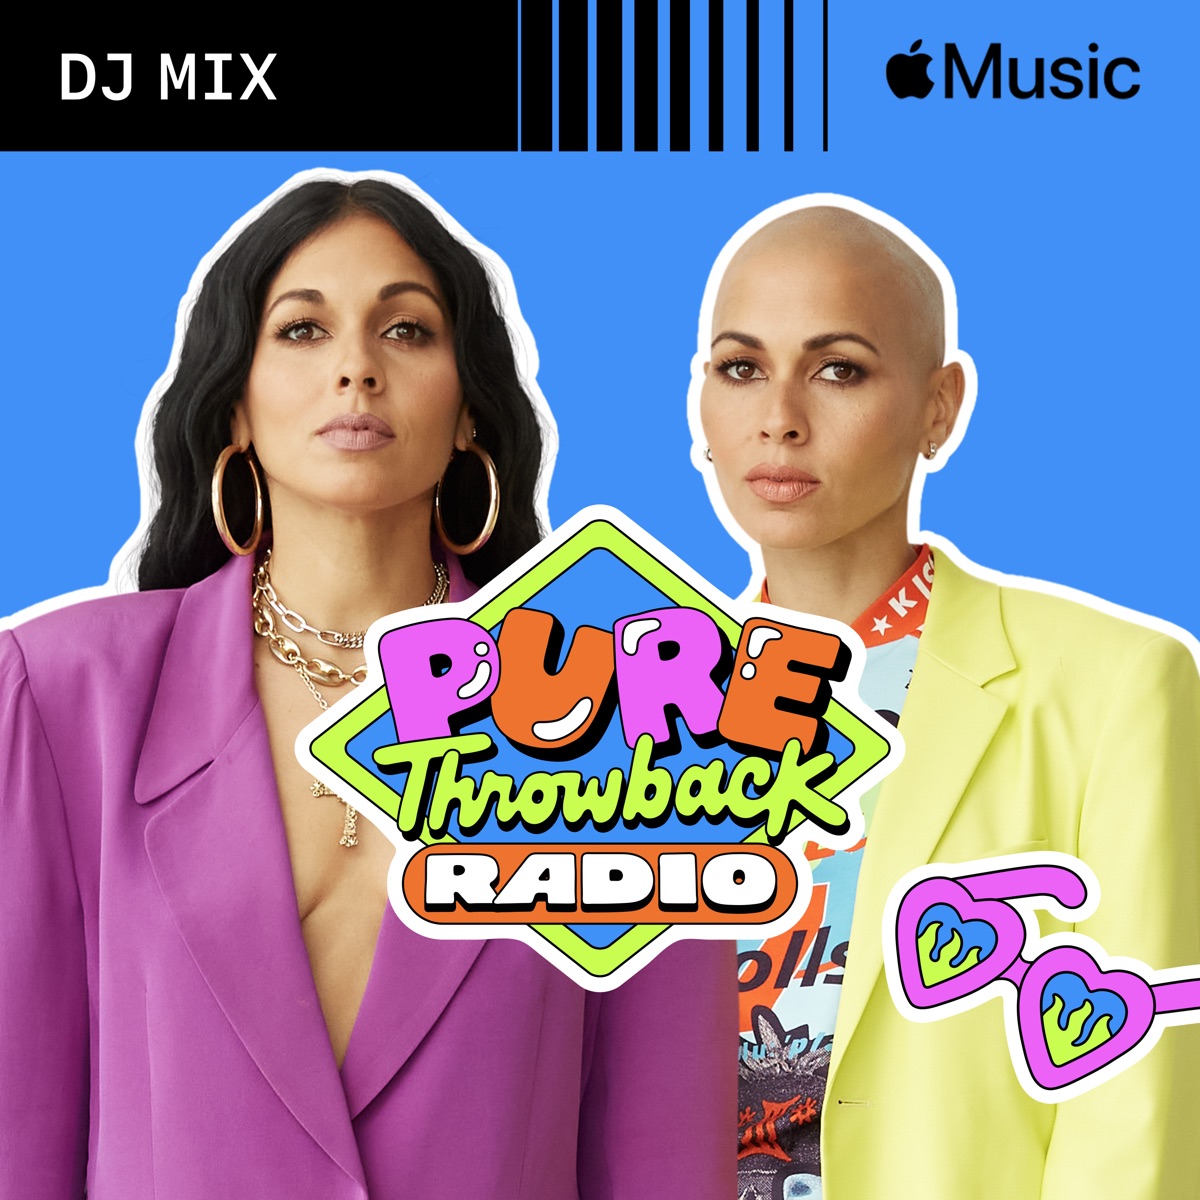 Pure Throwback Radio: Spring Break (DJ Mix) by Nina Sky on Apple Music